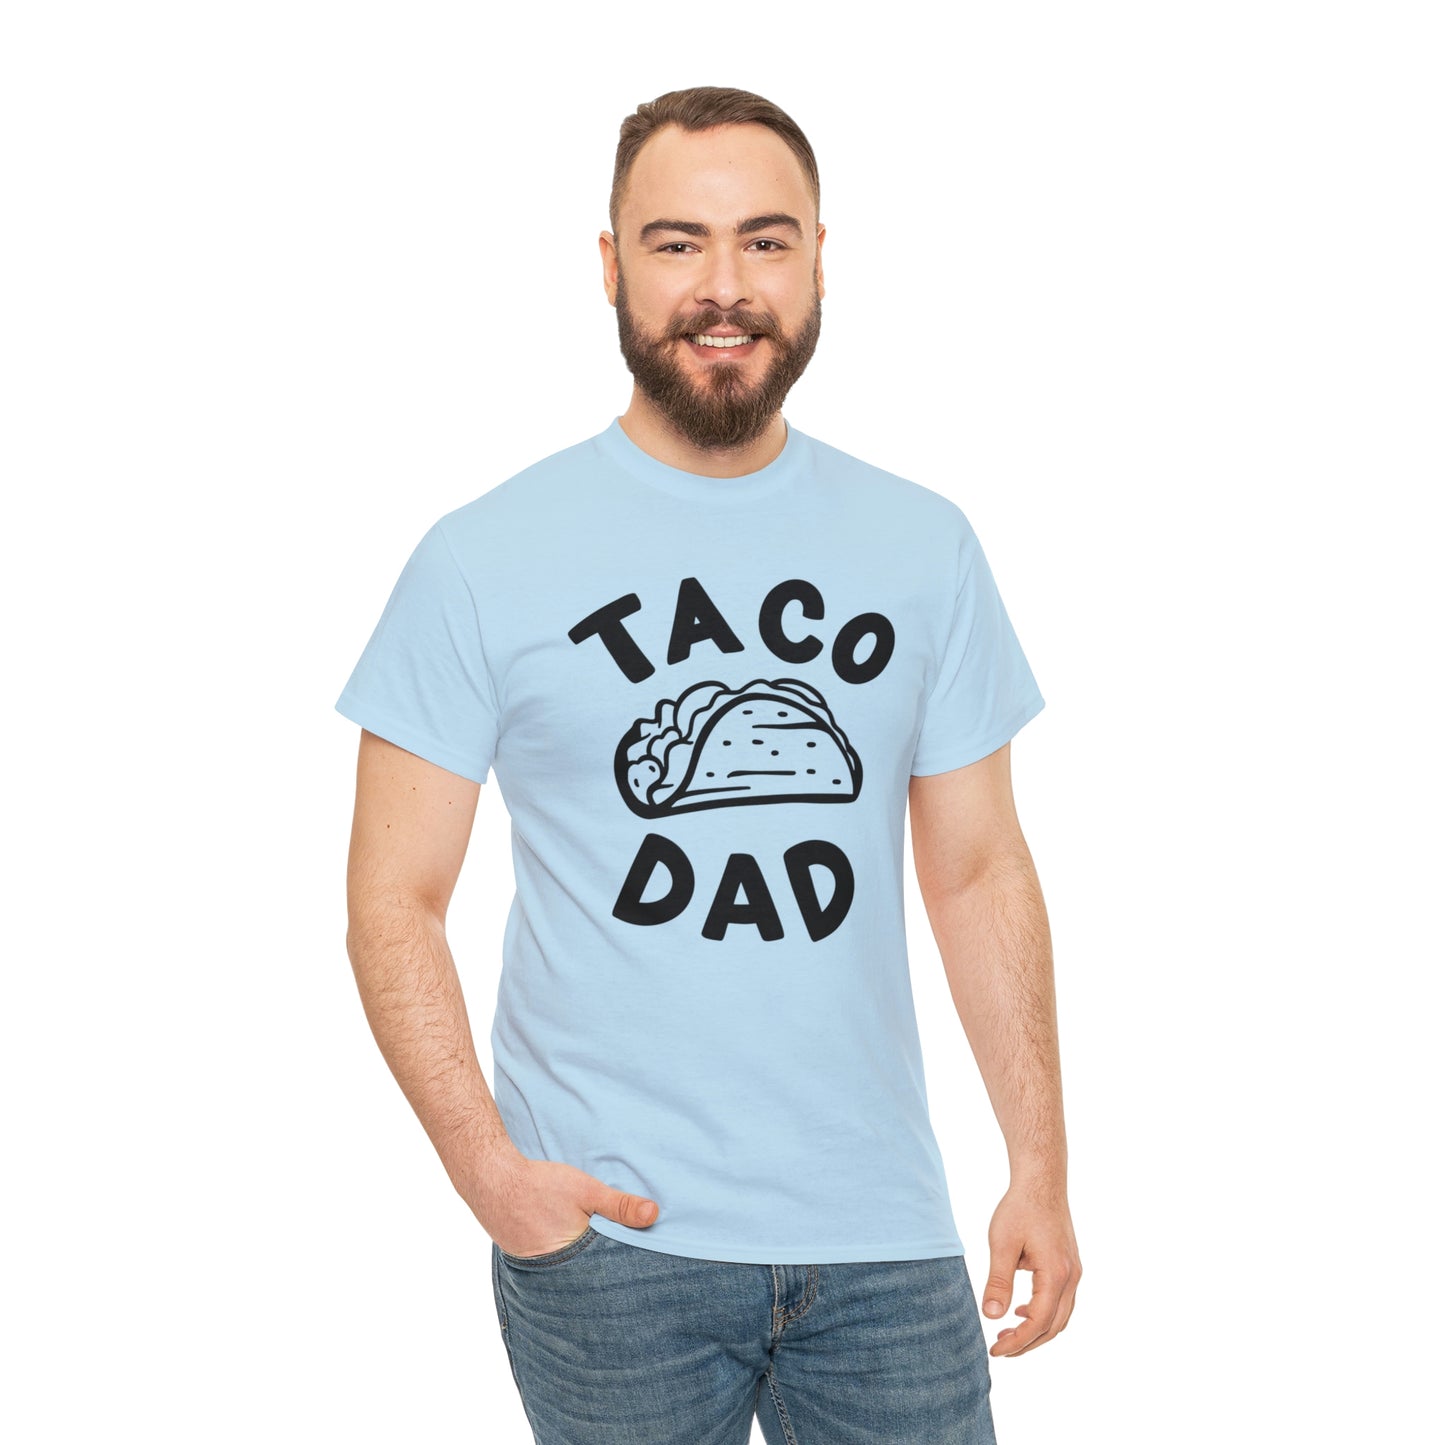 TACO DAD T-SHIRT